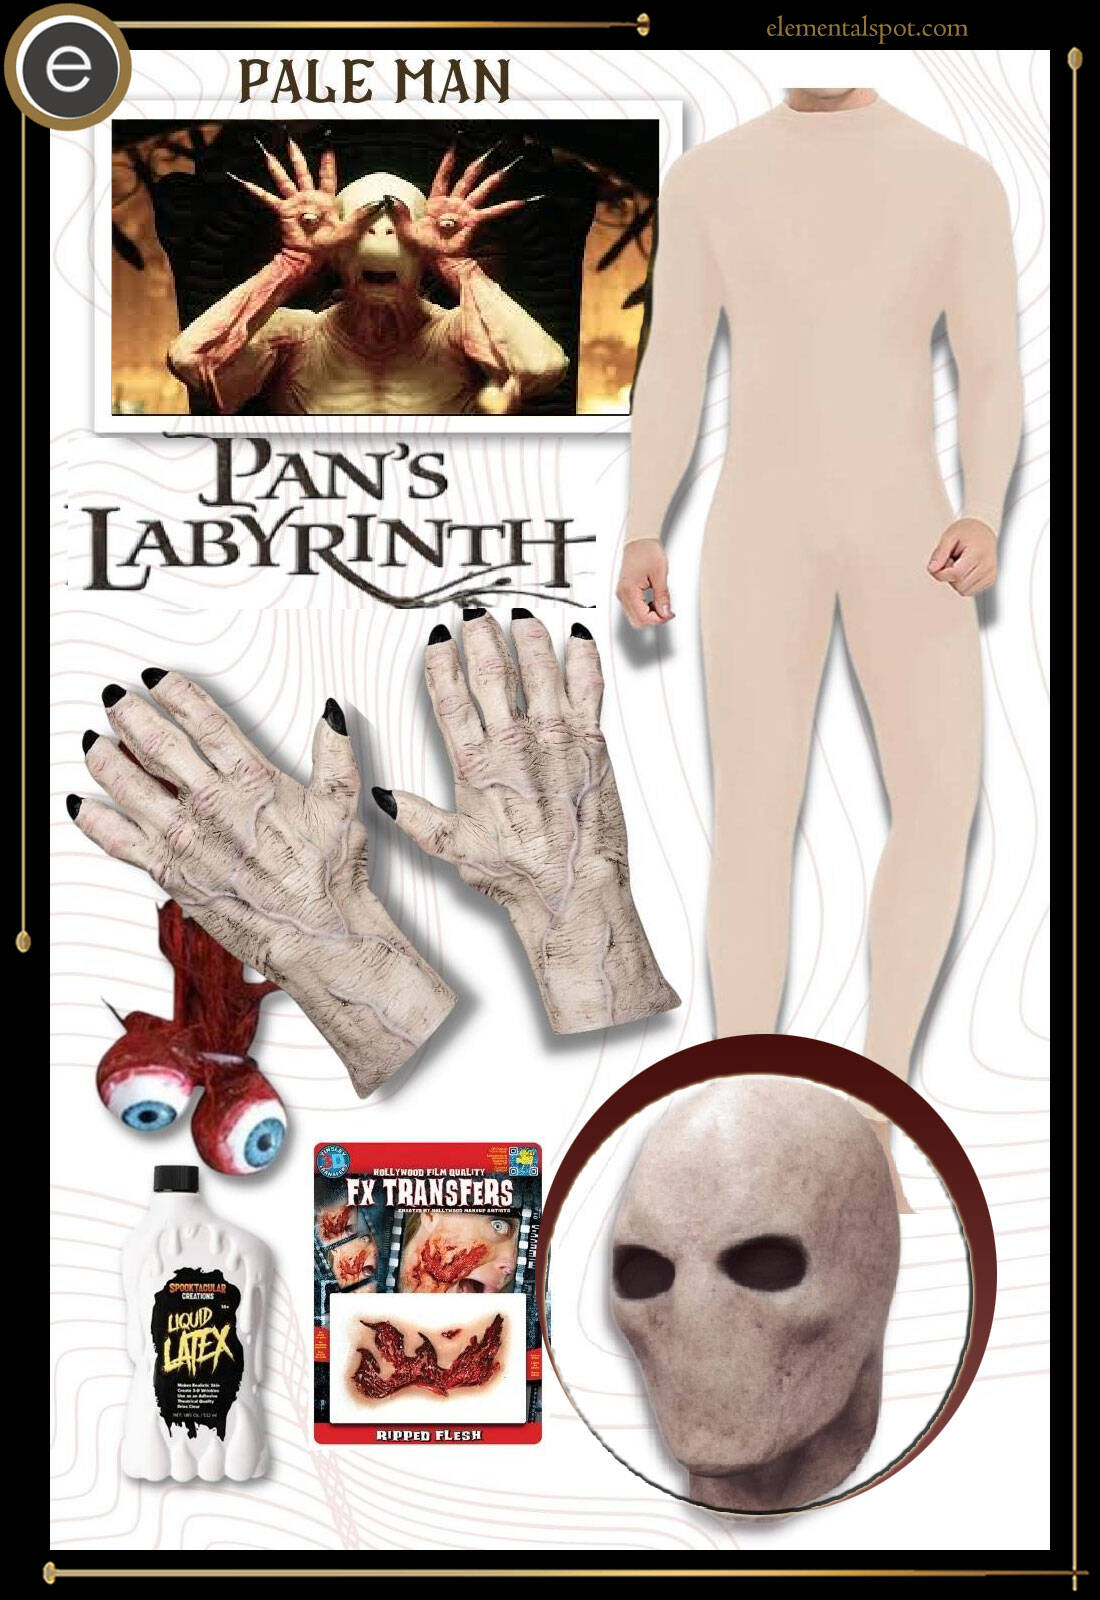 costume-Pale Man-Pan's Labyrinth